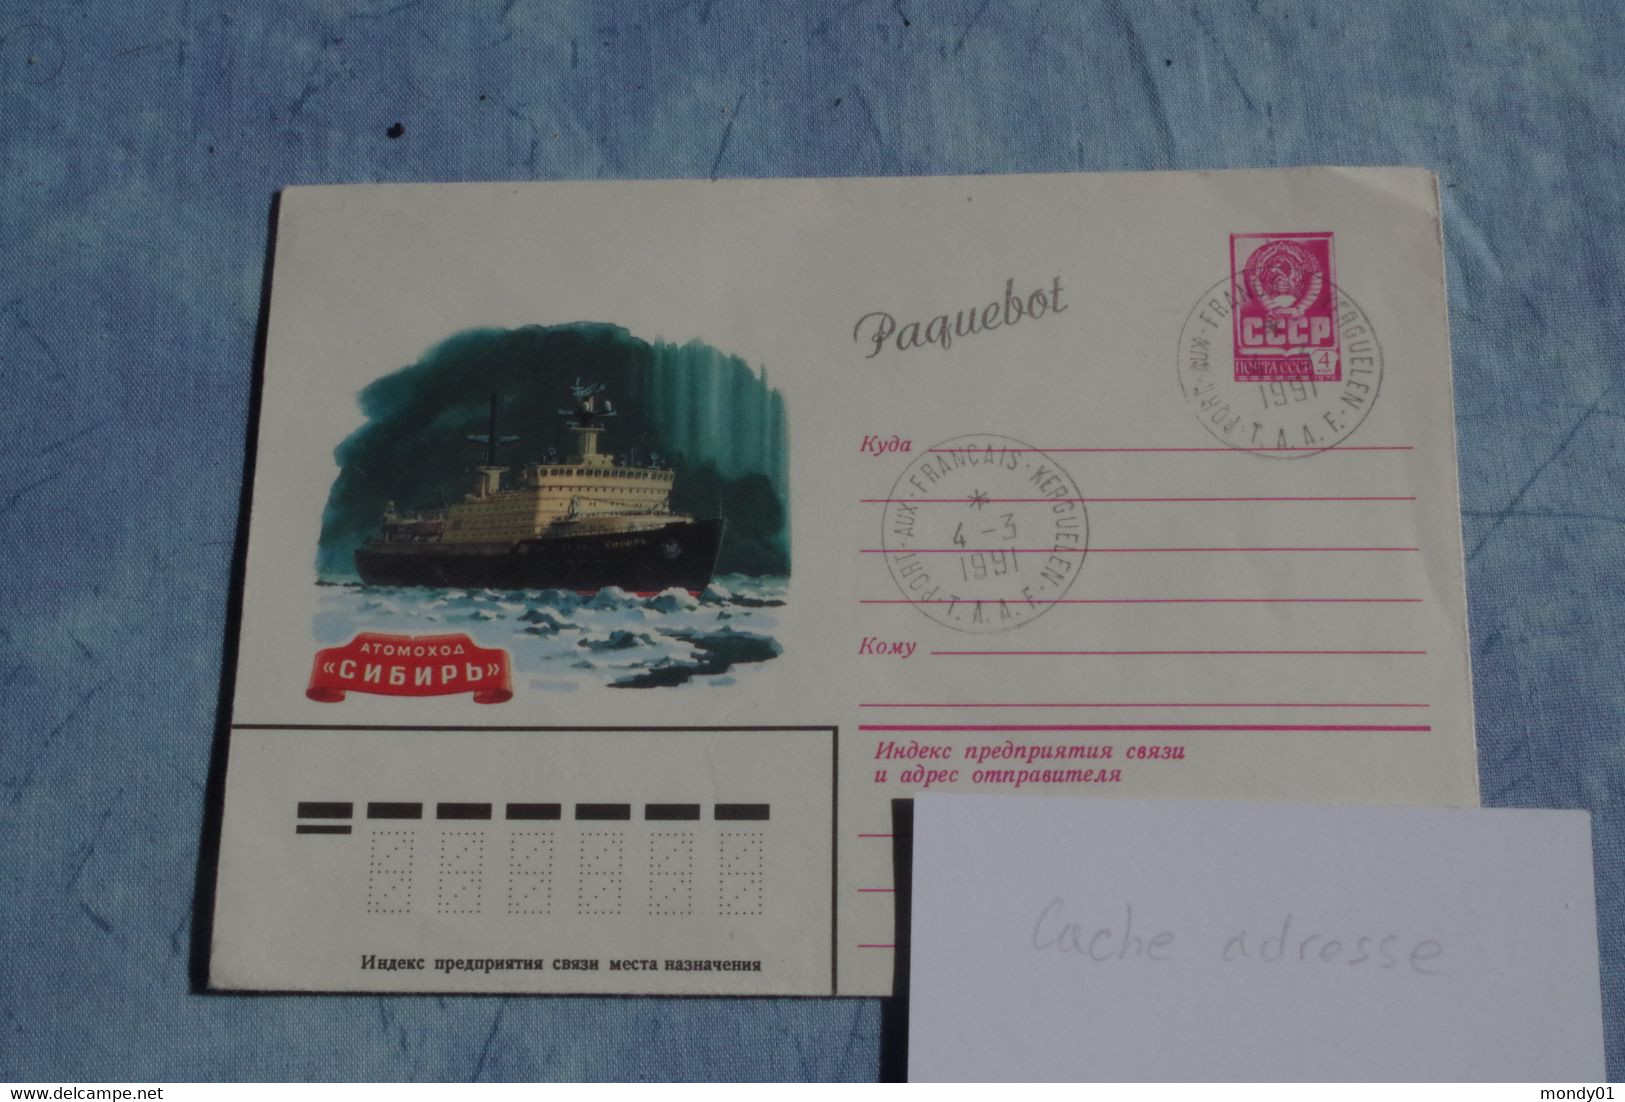 5-776  Paquebot Kerguelen 4 Mars 1991  Entier Poste URSS Navire Atomic TAAF FAAT Atome énergie Nucléaire - Polarforscher & Promis